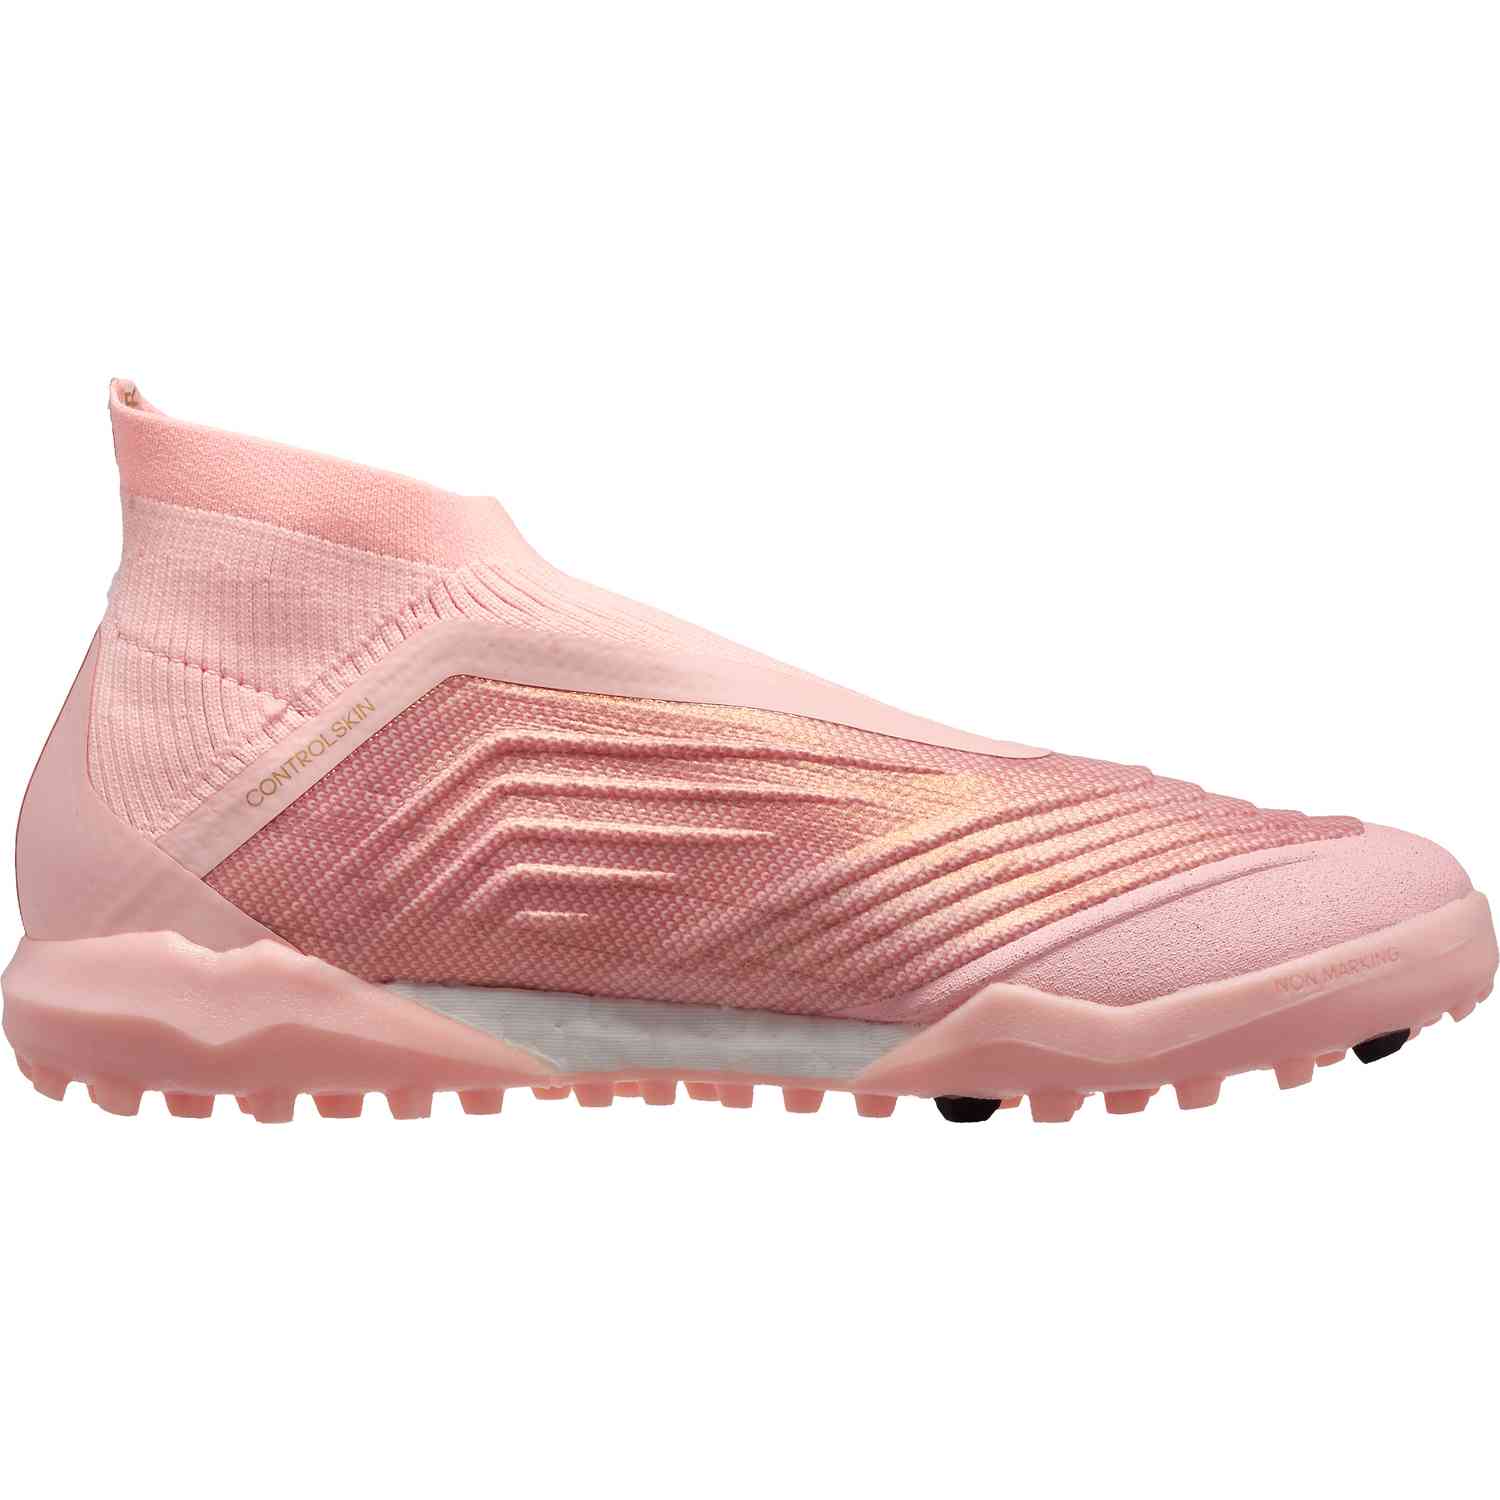 adidas predator pink indoor